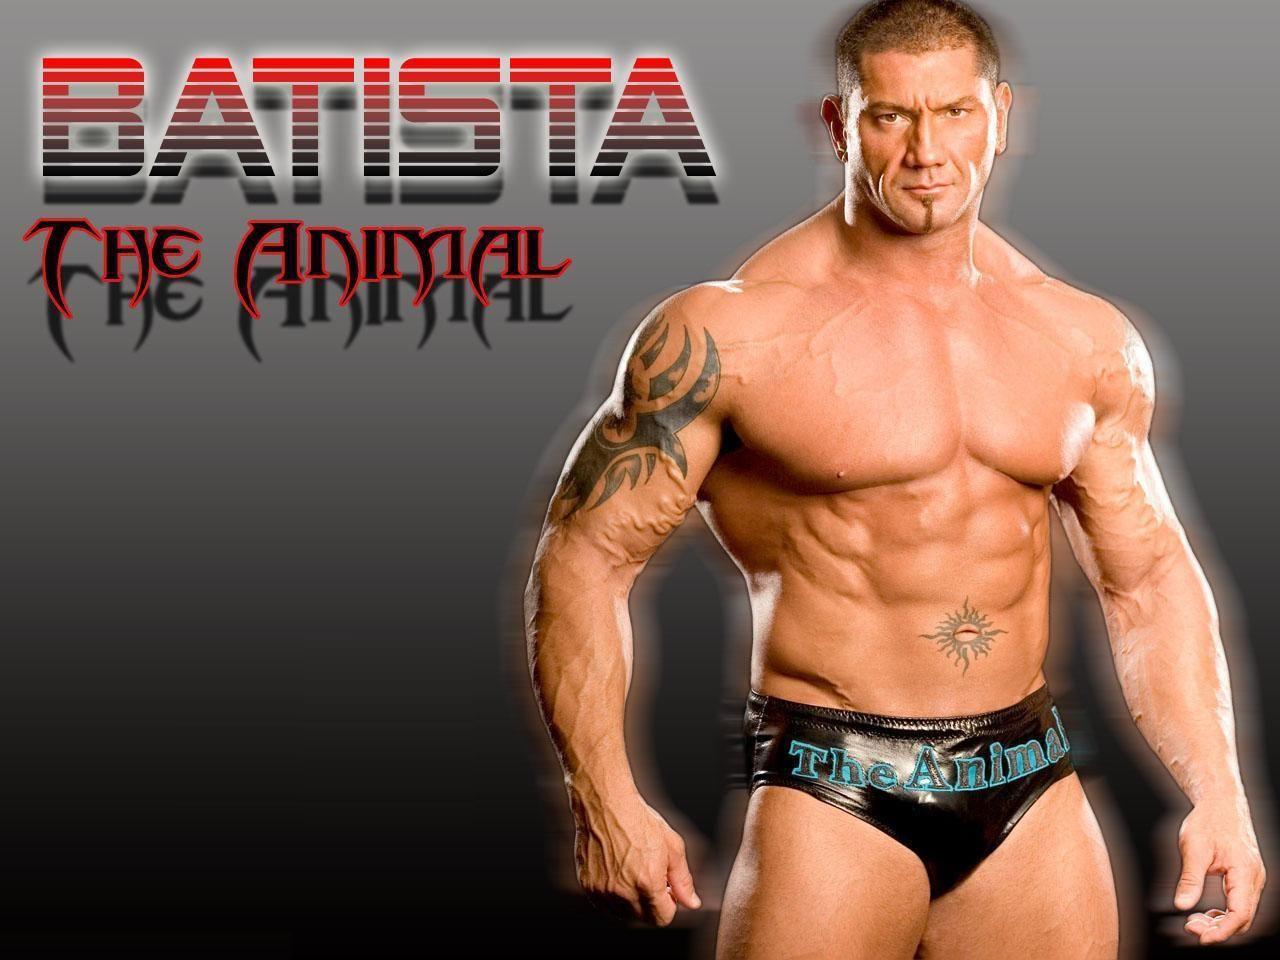 Batista The Animal wallpaper